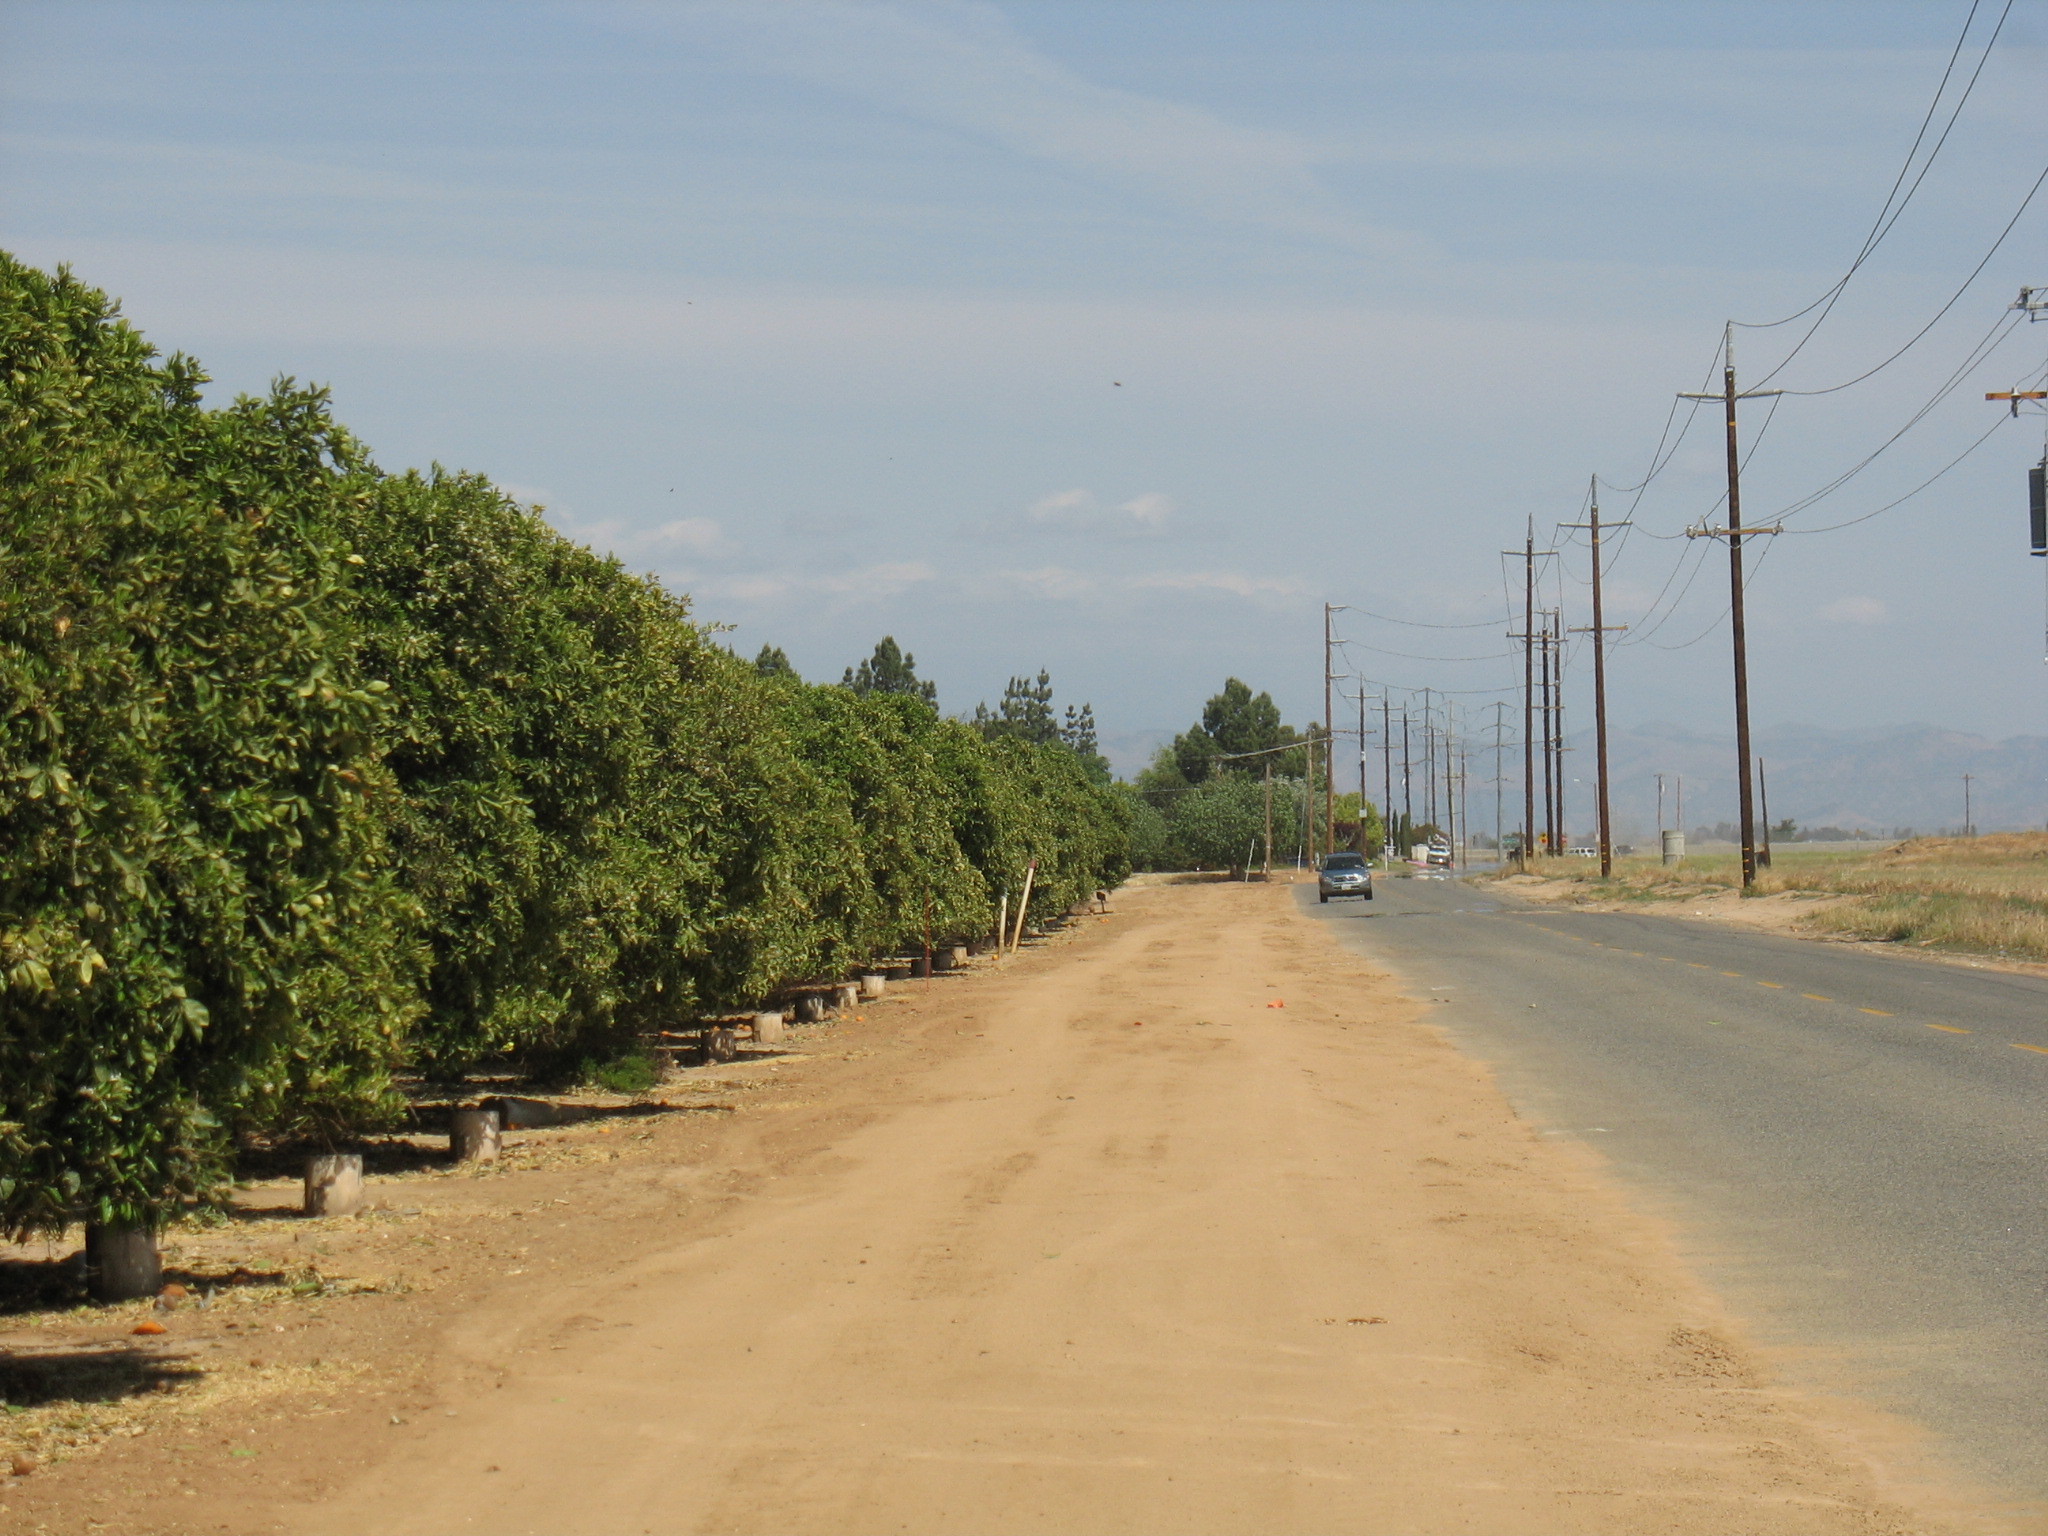 Groves of trees along a rural road near Madera